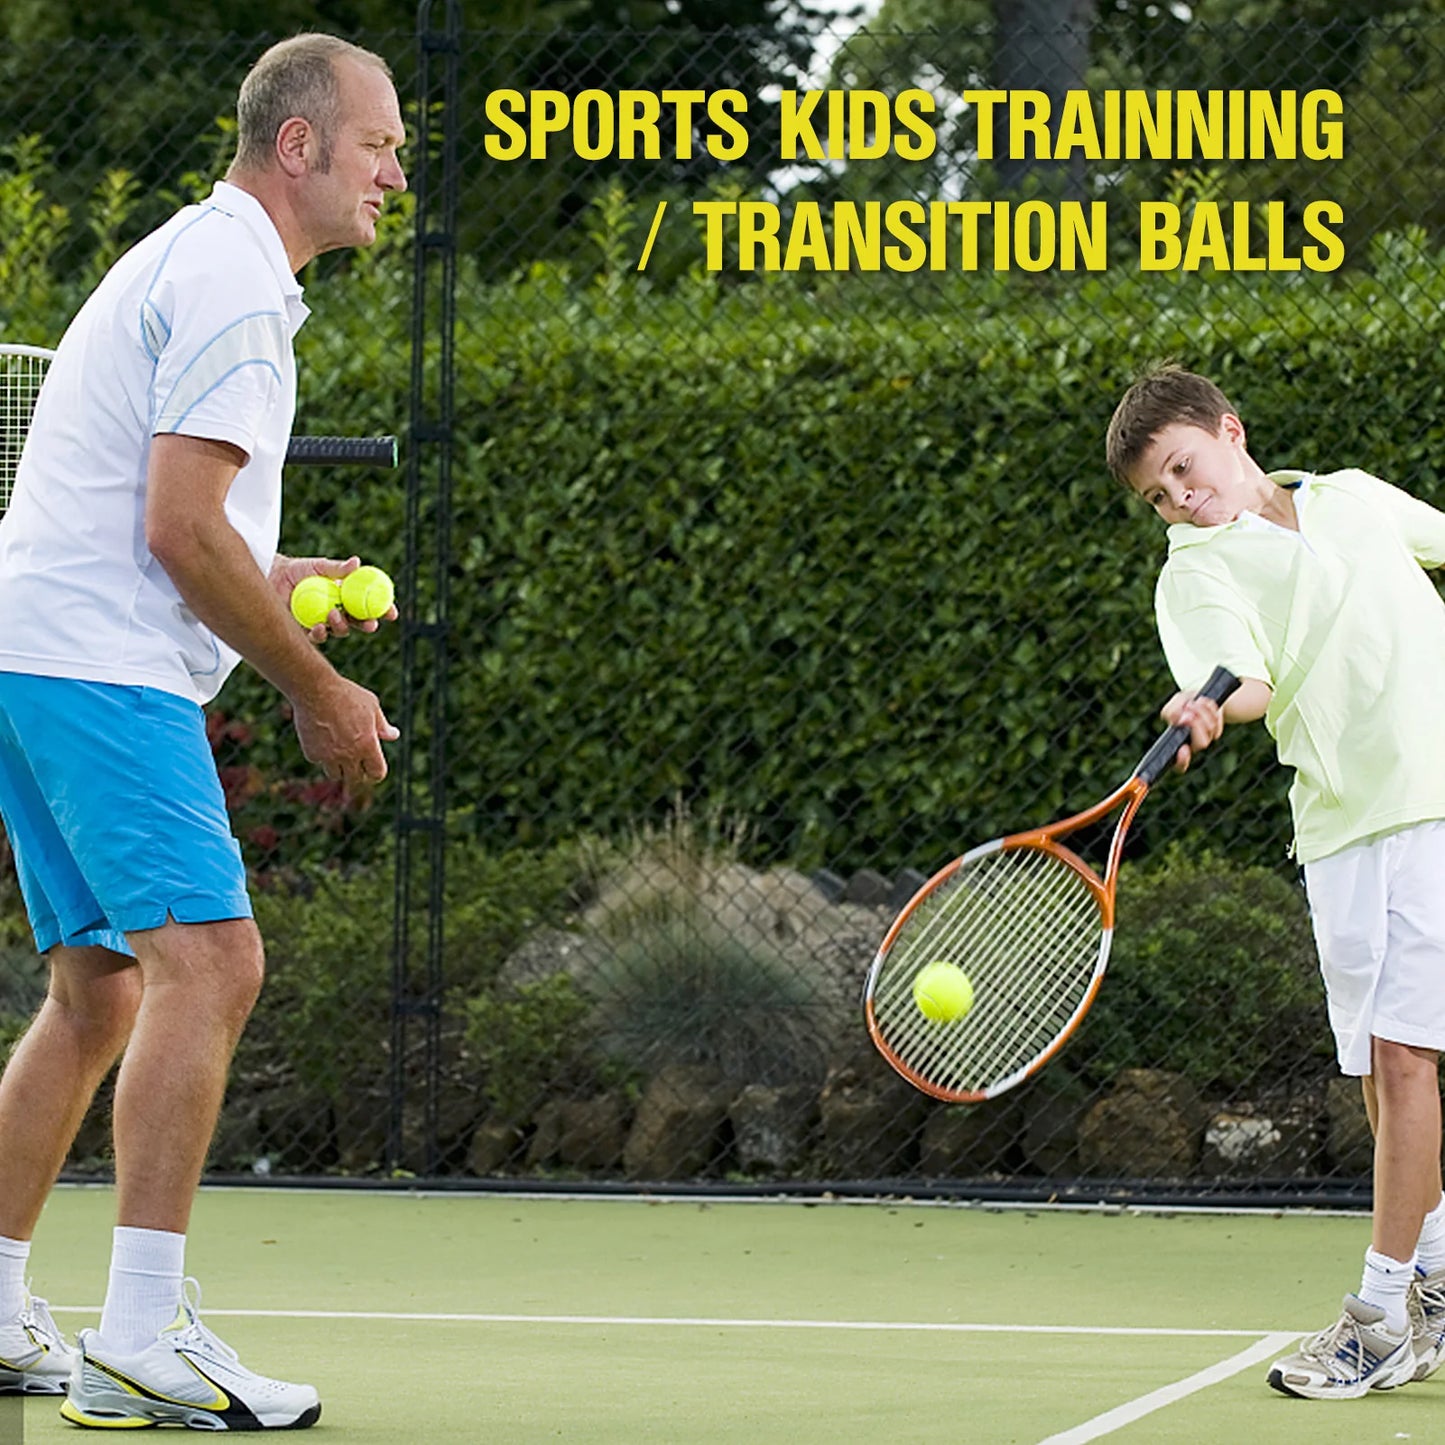 12 Pcs   High Bounce Practice Outdoor Training   Tennis Balls